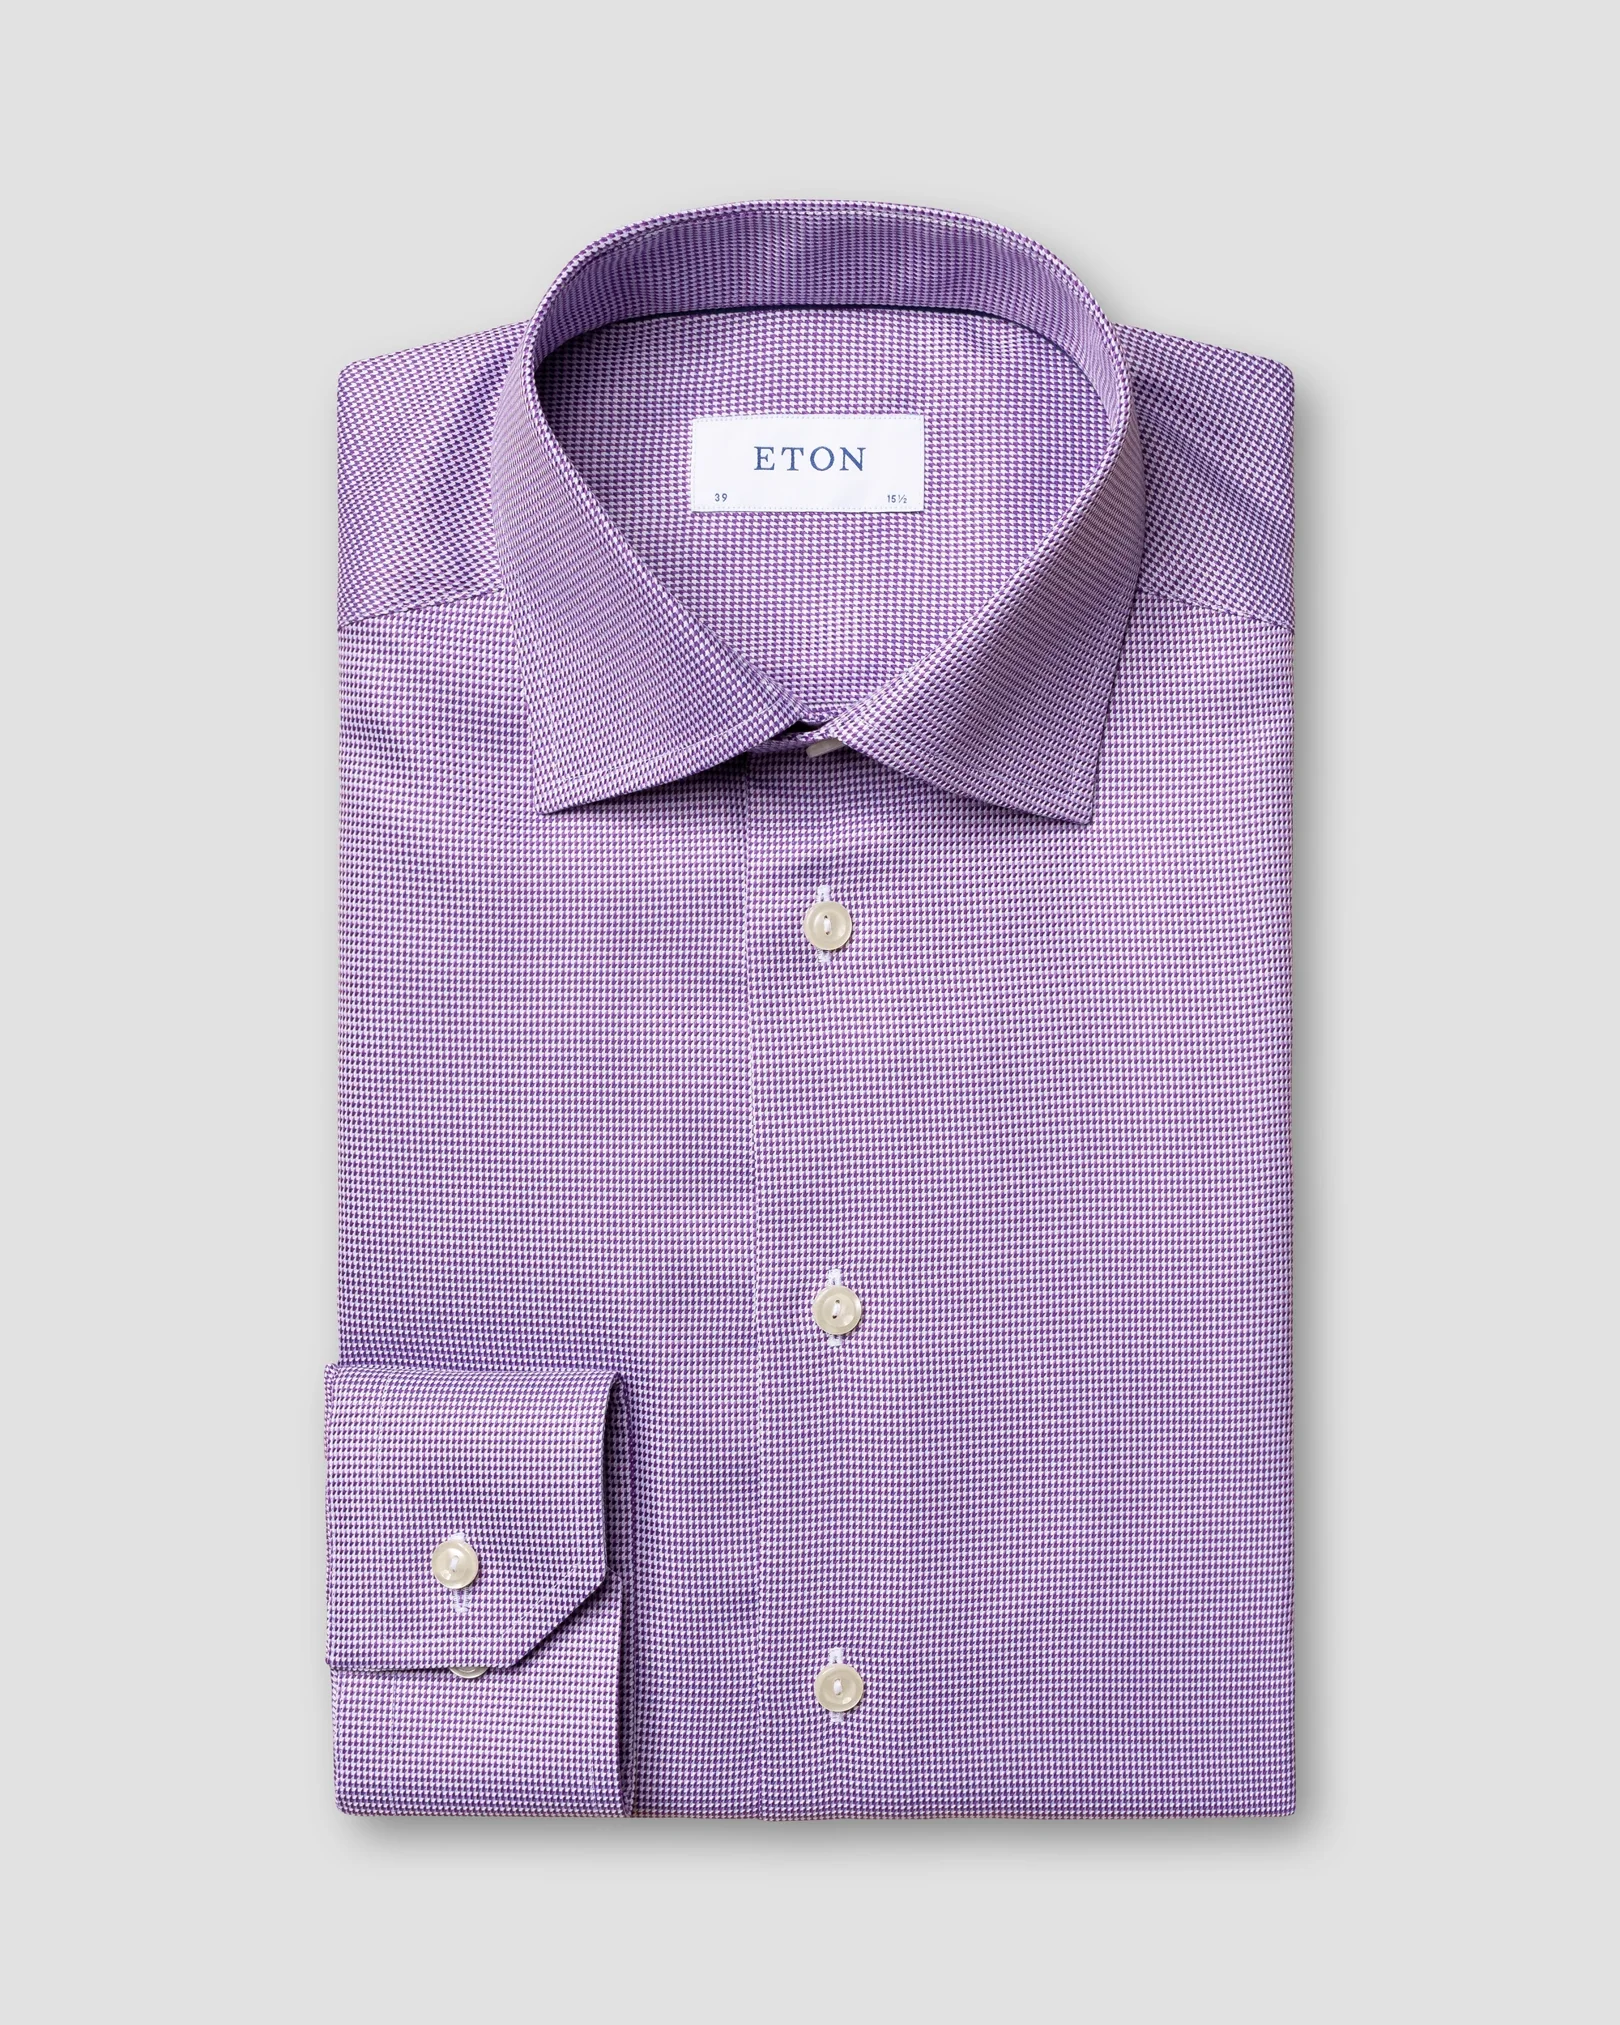 Eton - purple twill shirt